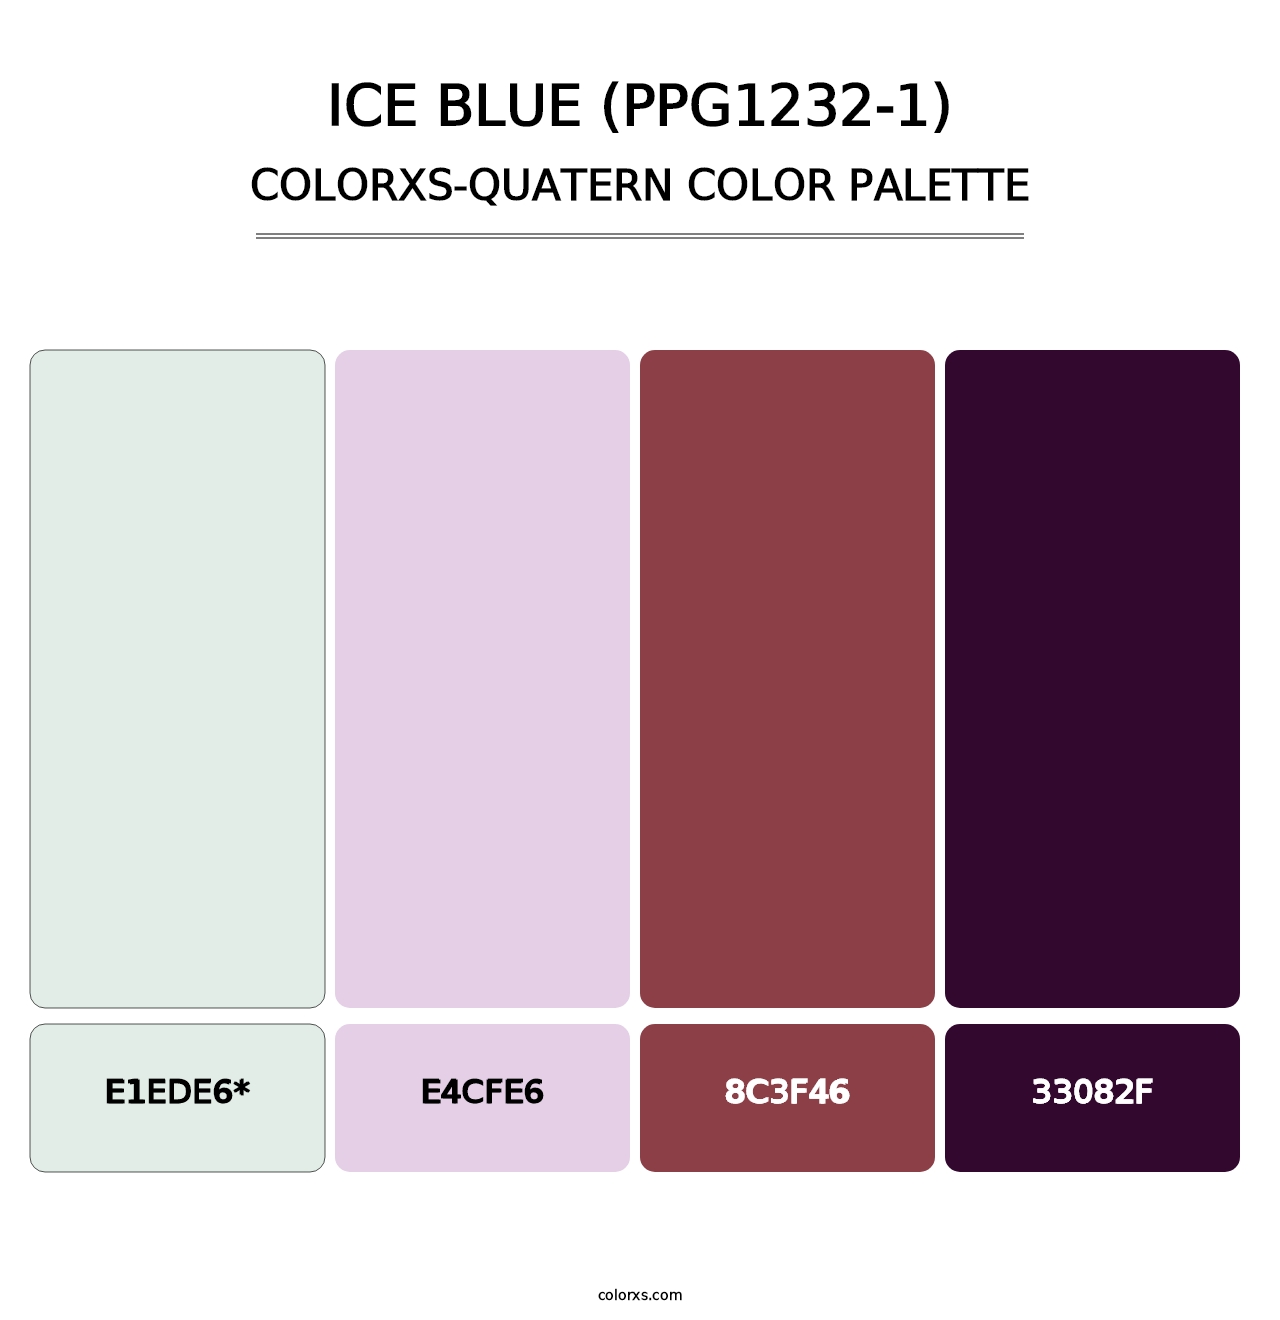 Ice Blue (PPG1232-1) - Colorxs Quatern Palette